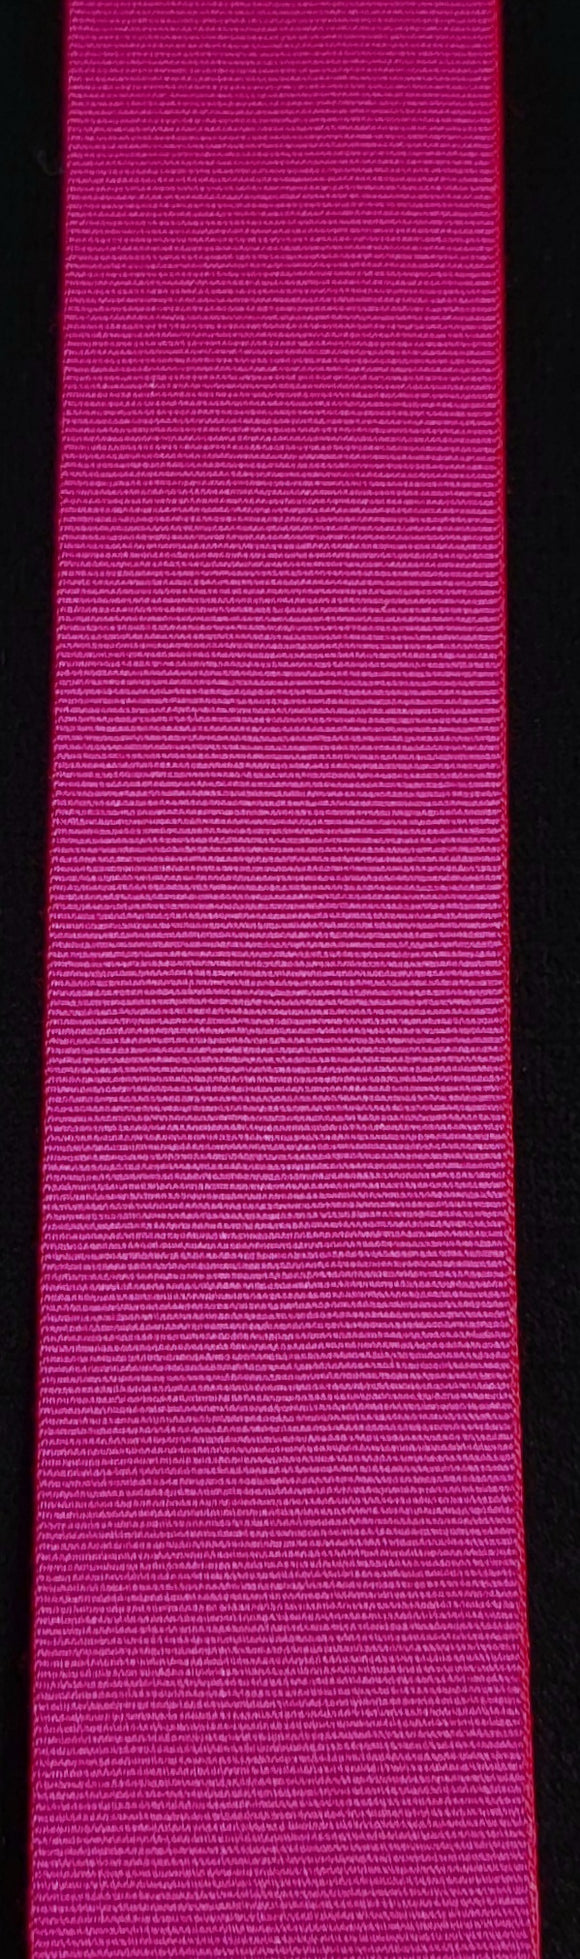 Ribbon, Victoria Cross